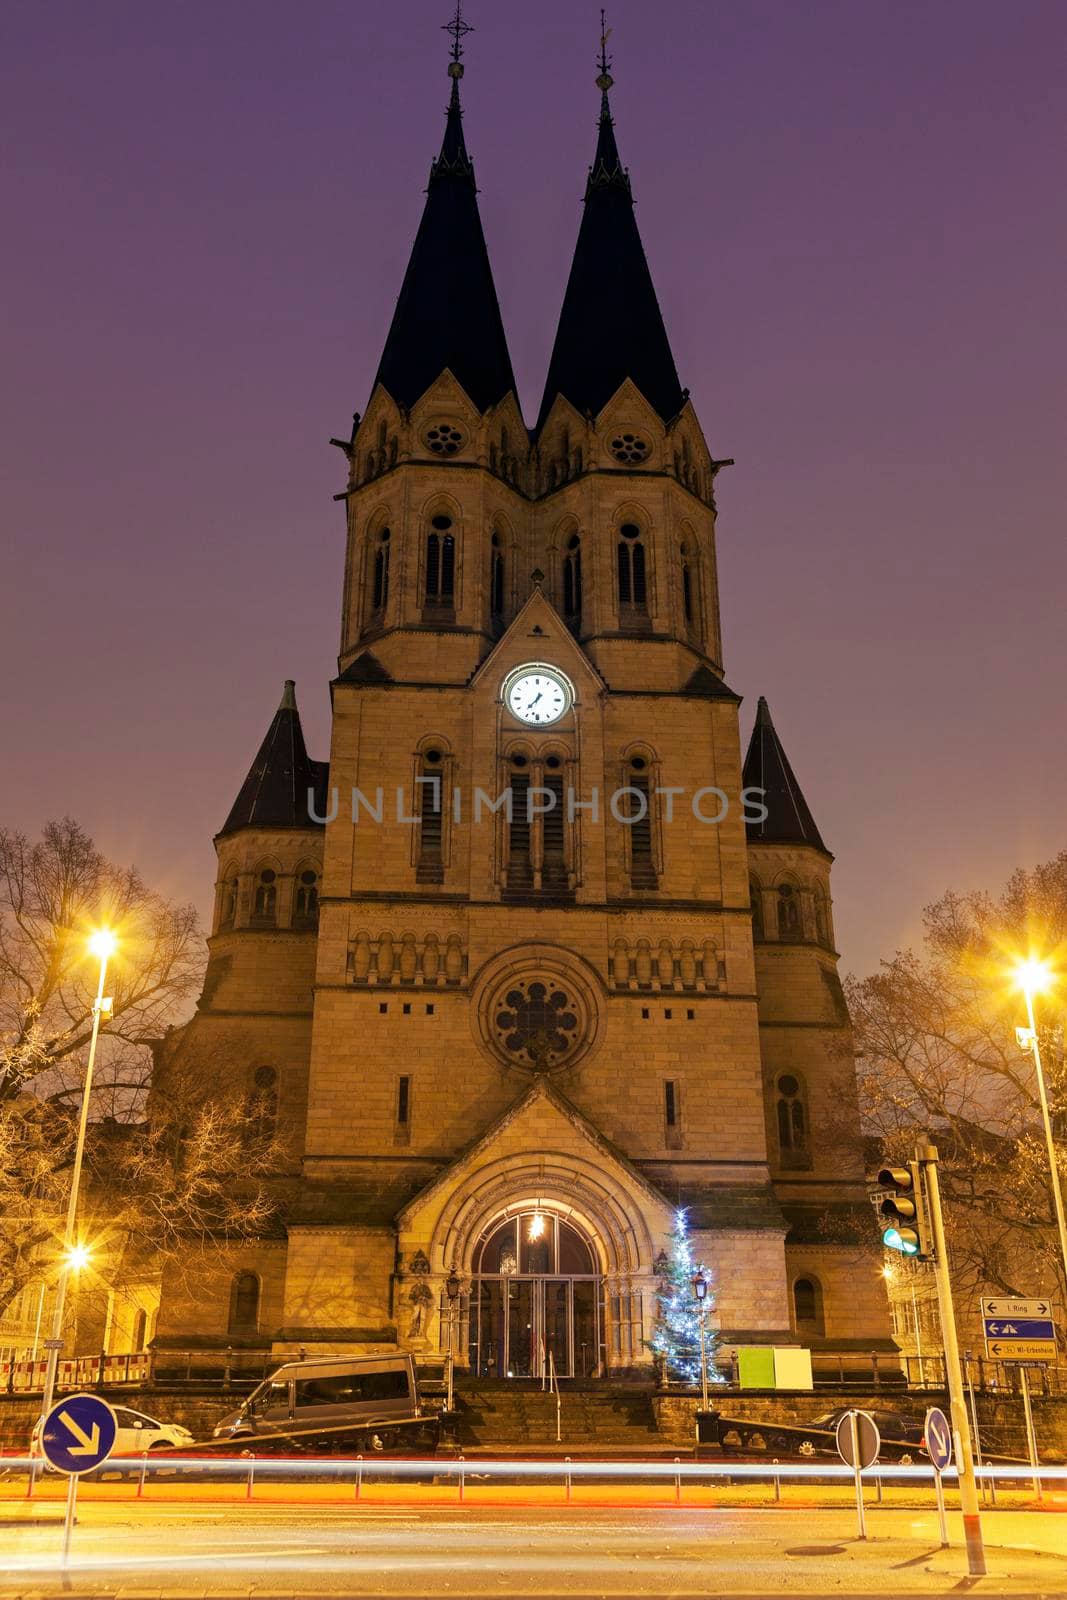 Ringkirche in Wiesbaden at sunrise by benkrut